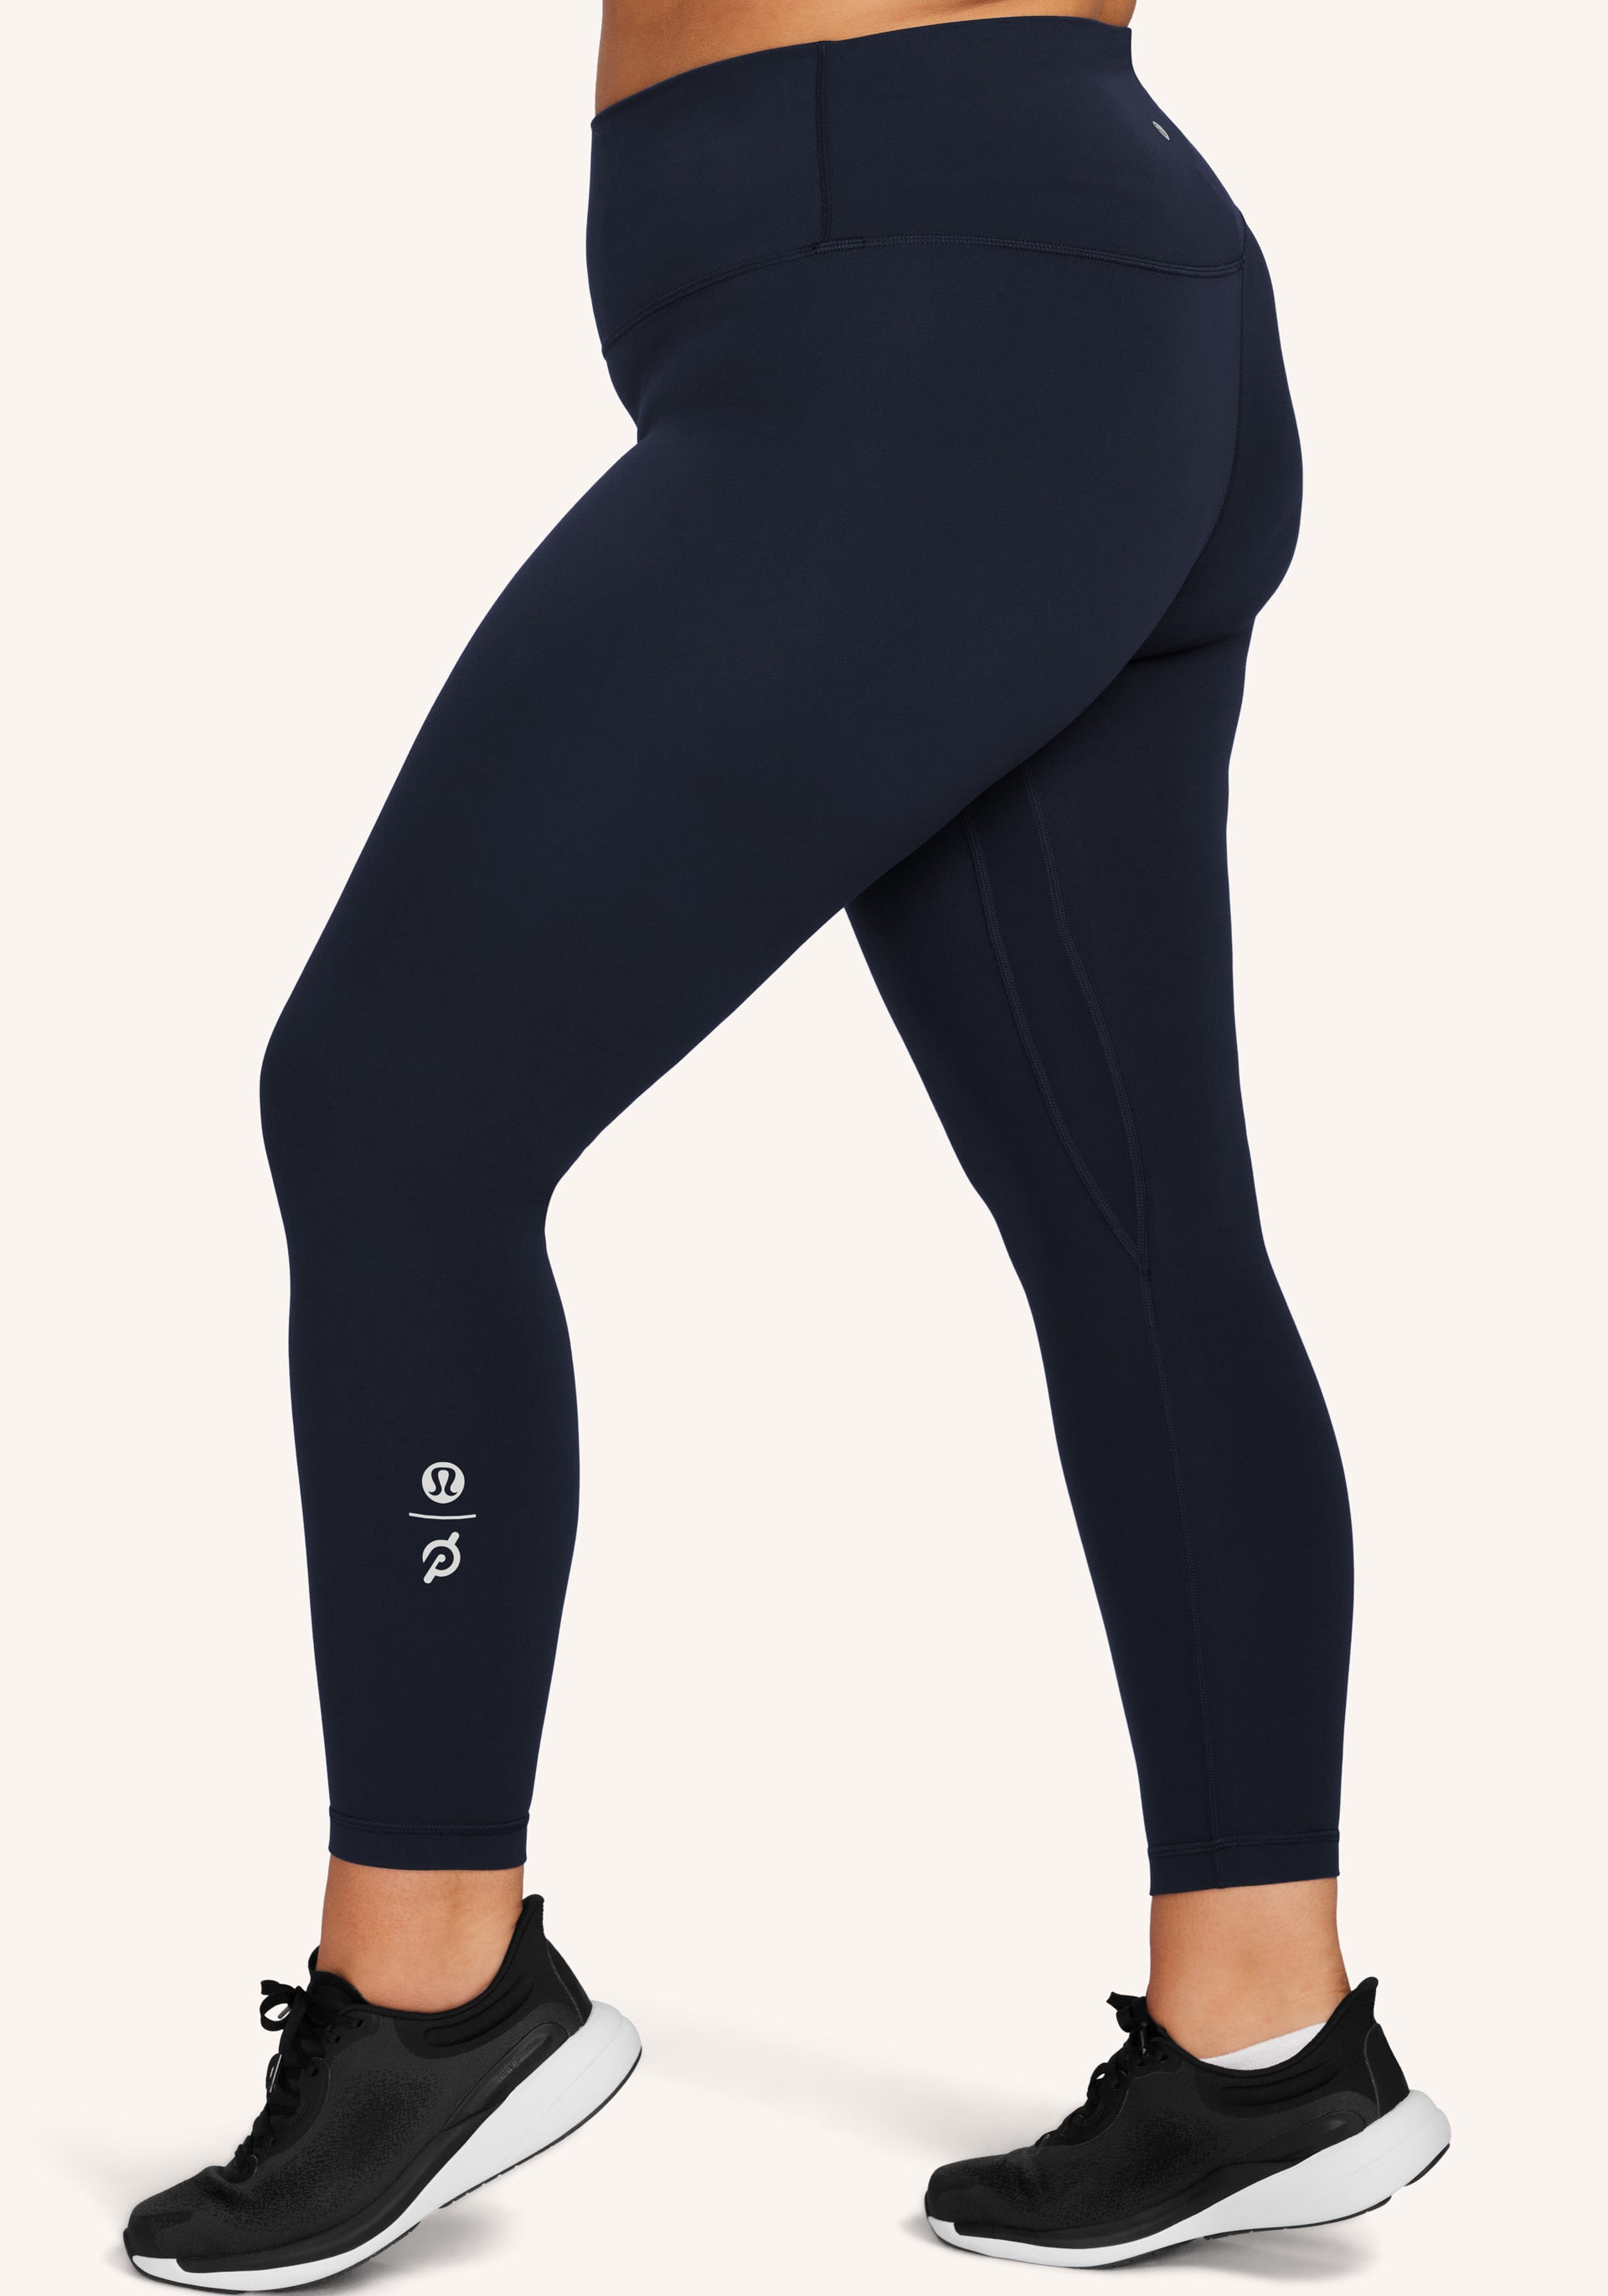 Buy Lululemon Align Pant Full Length Yoga Pants (Black, 6) at